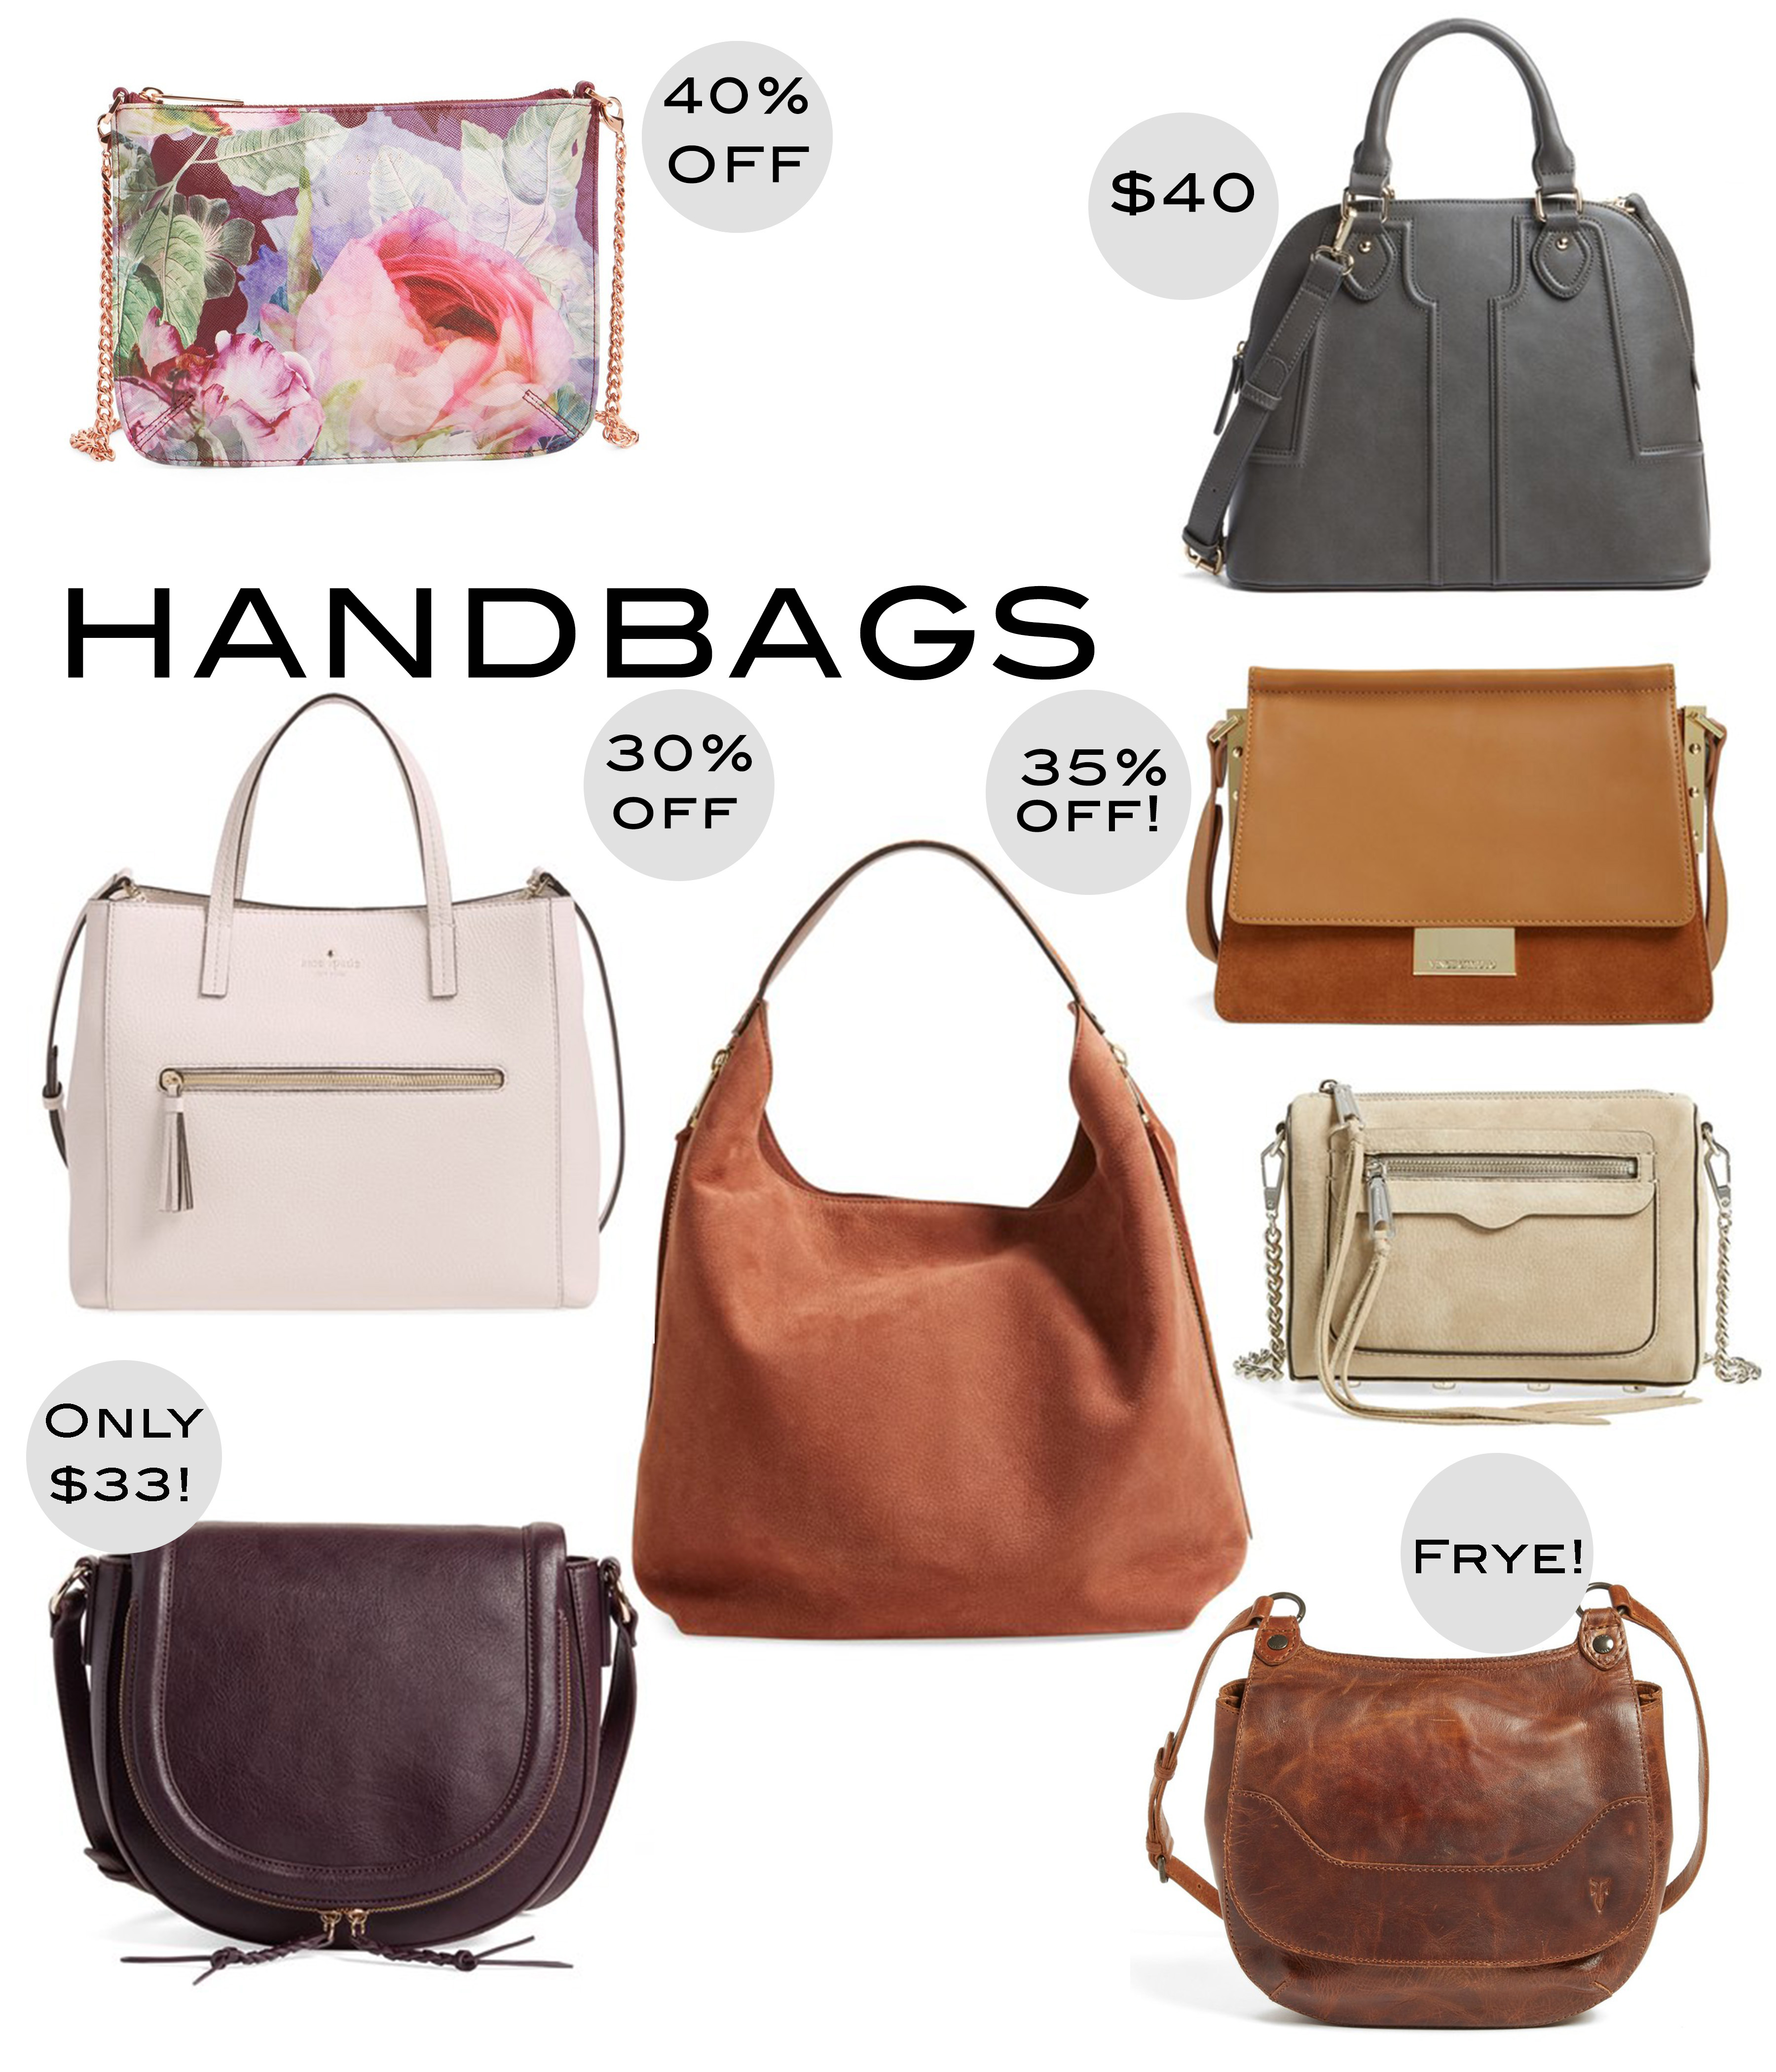 nordstrom anniversary sale angela lanter hello gorgeous handbags